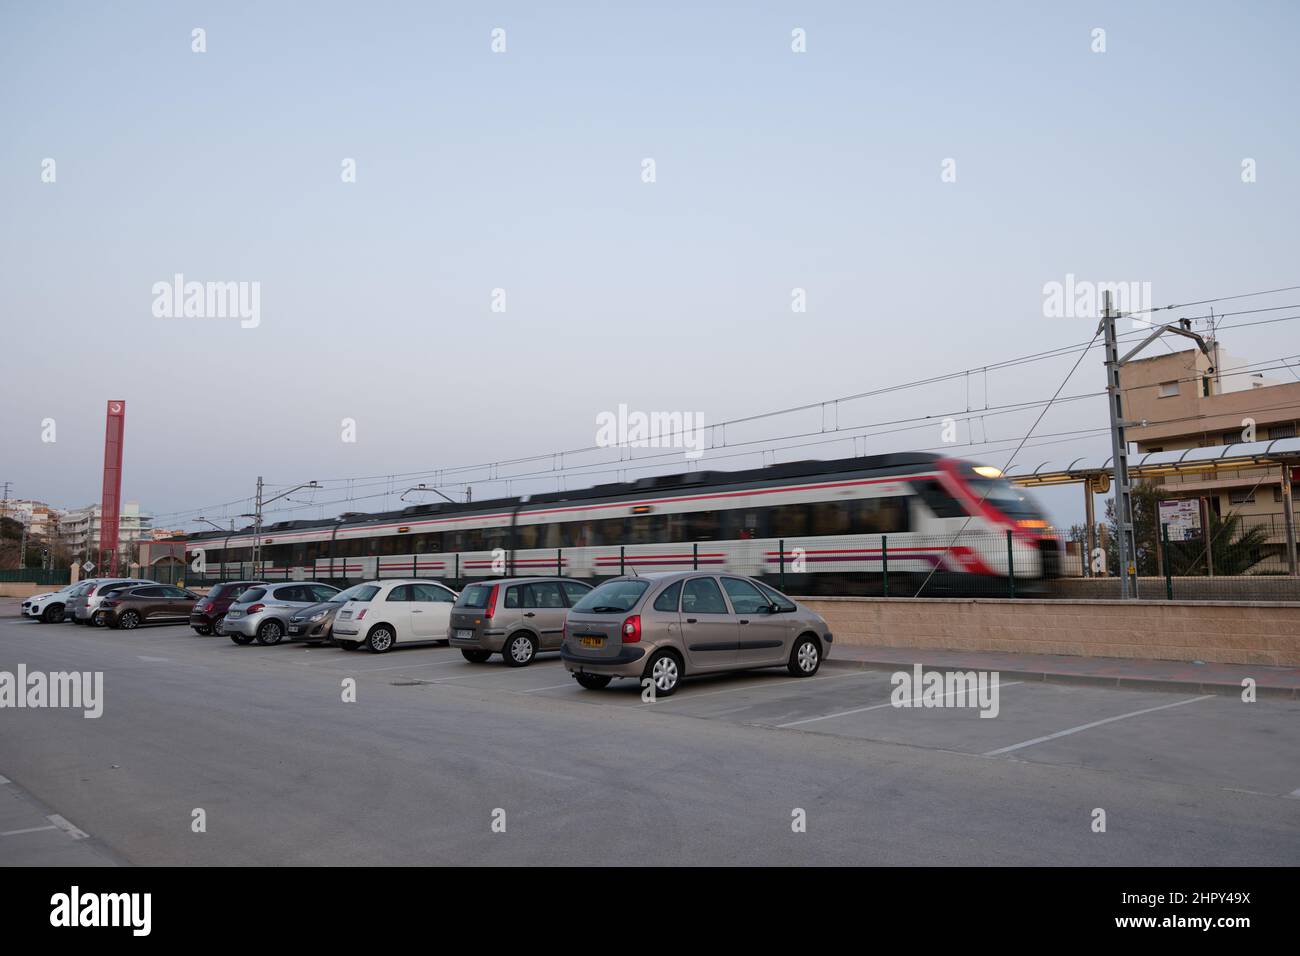 Renfe Cercanias train arriving to Carvajal station, Fuengirola, Malaga province, Spain. Stock Photo